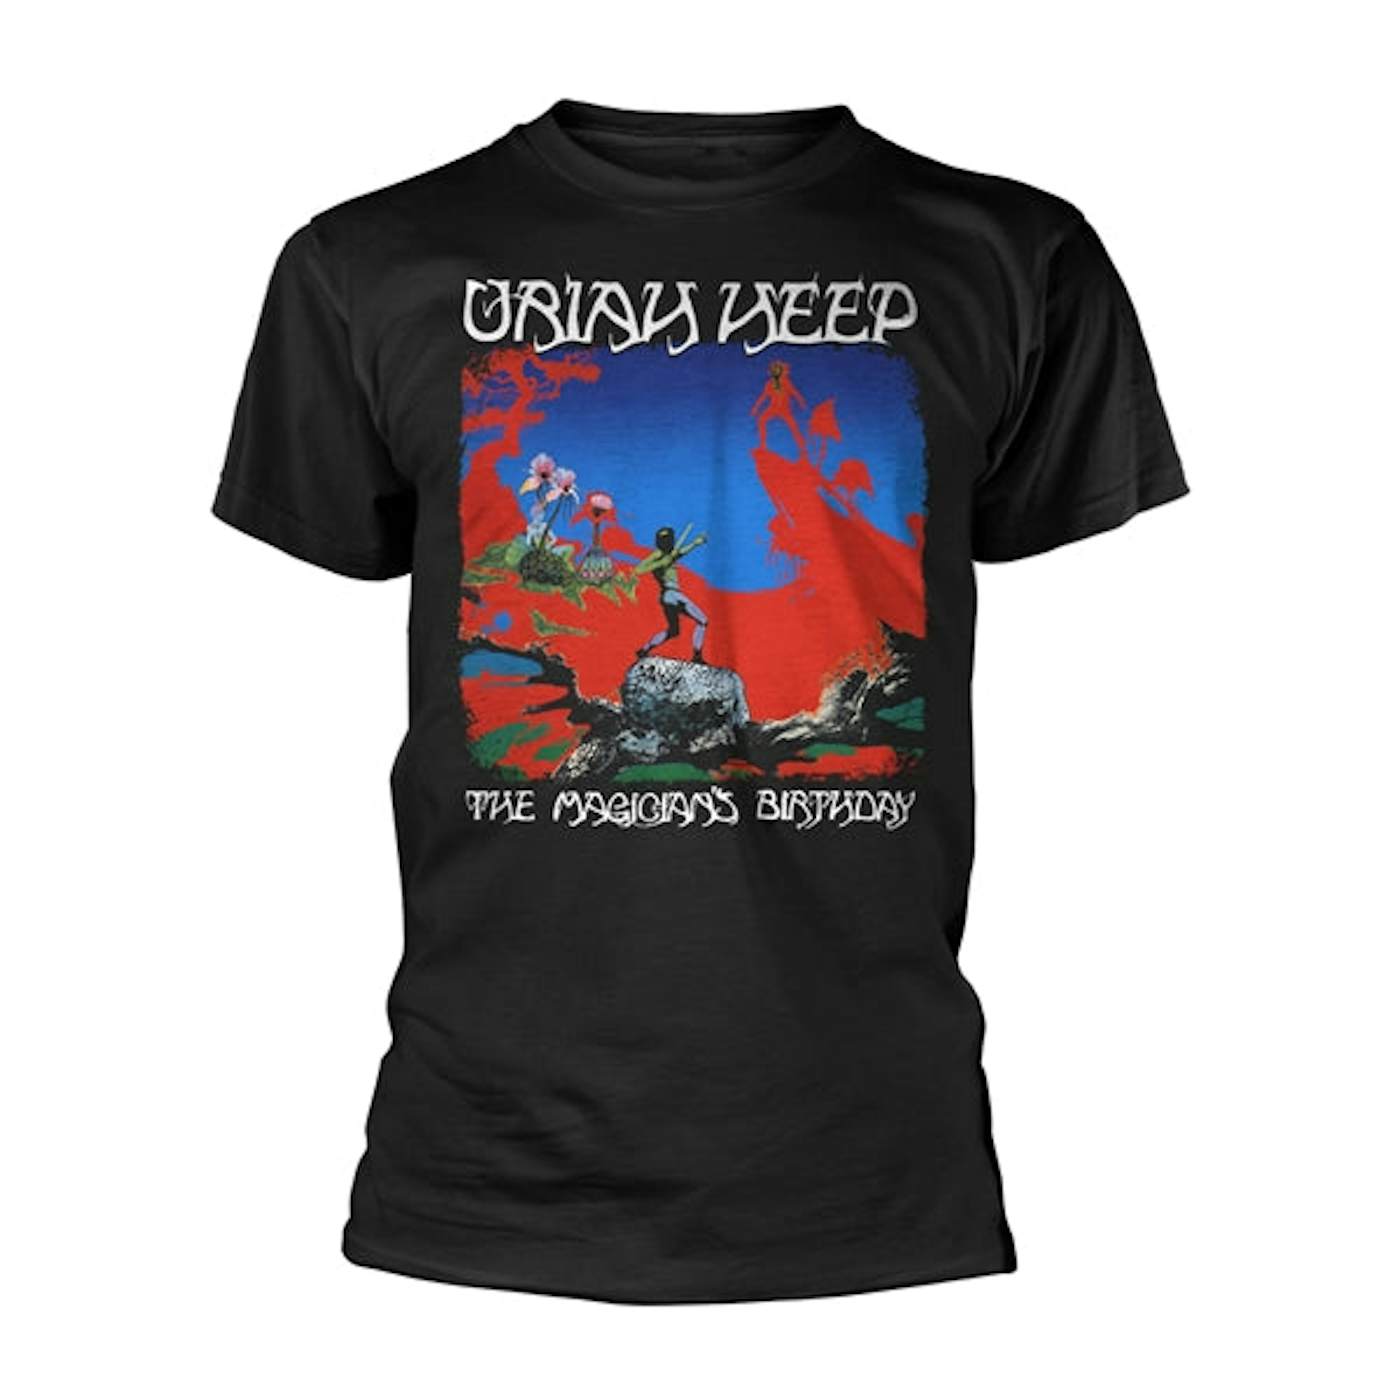 Uriah Heep T-Shirt - The Magicians Birthday (Black)